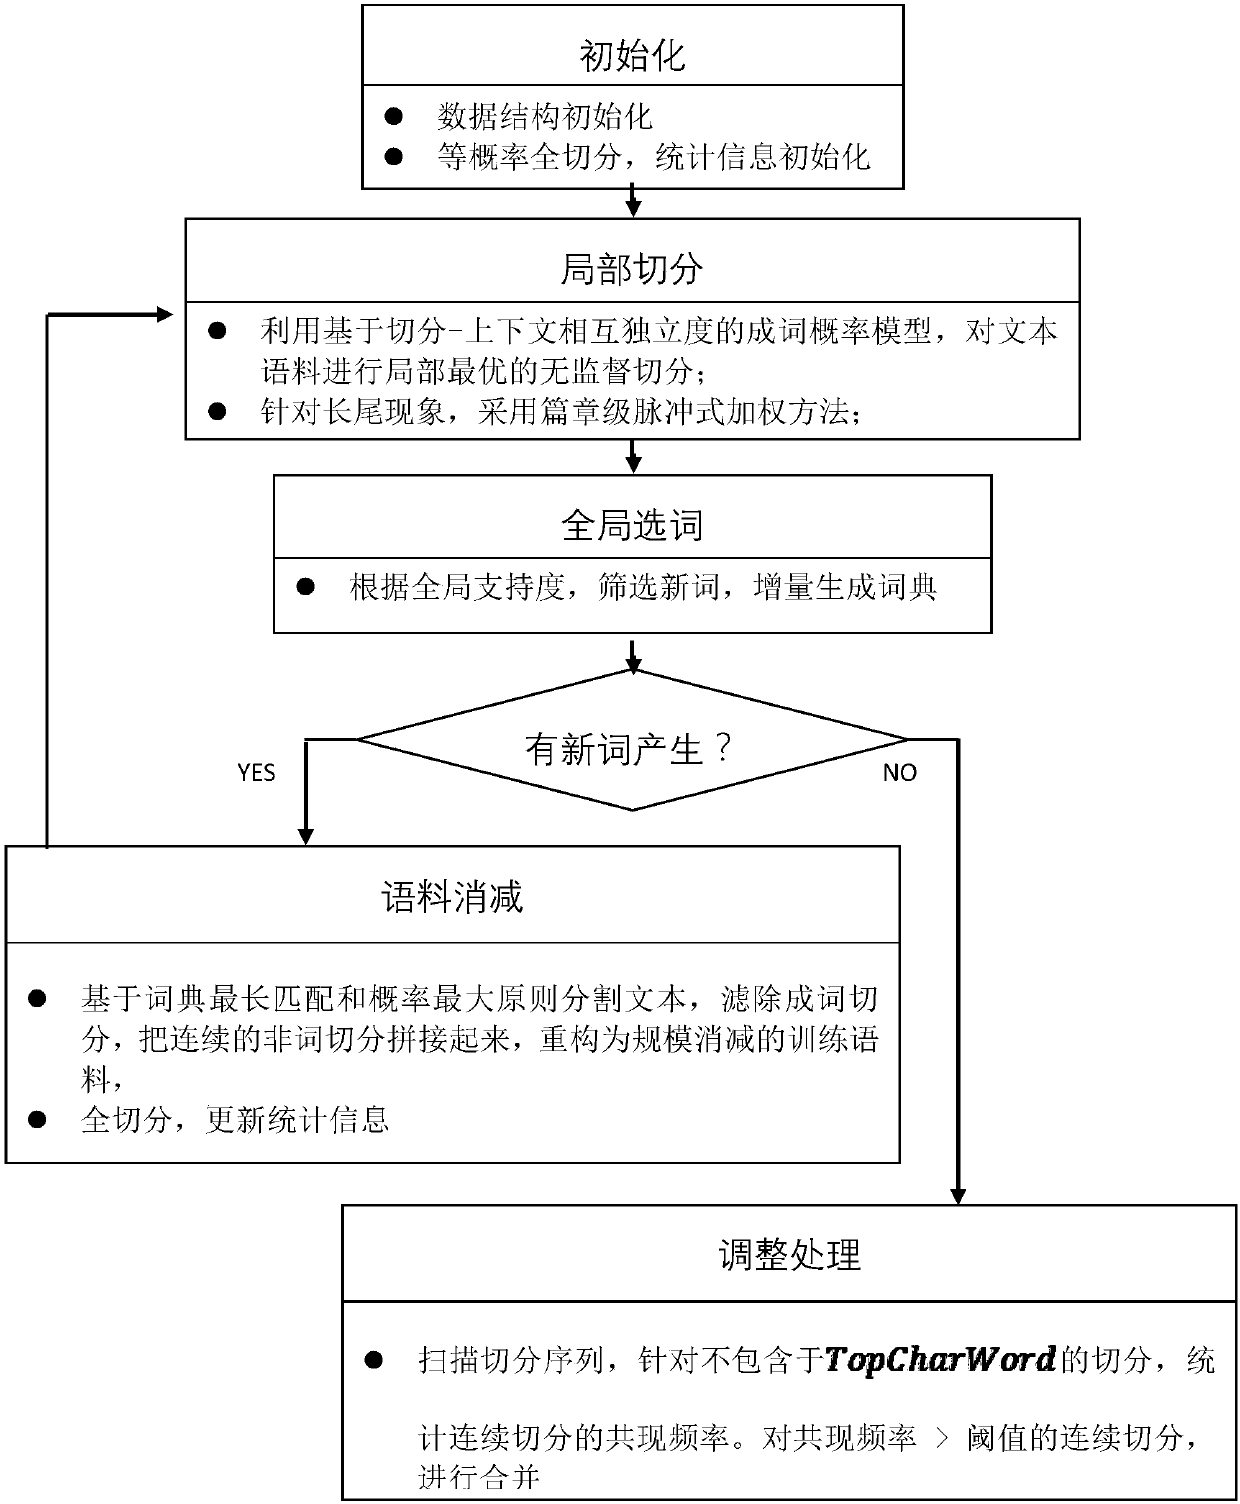 Iteration-based three-step unsupervised Chinese word segmentation method